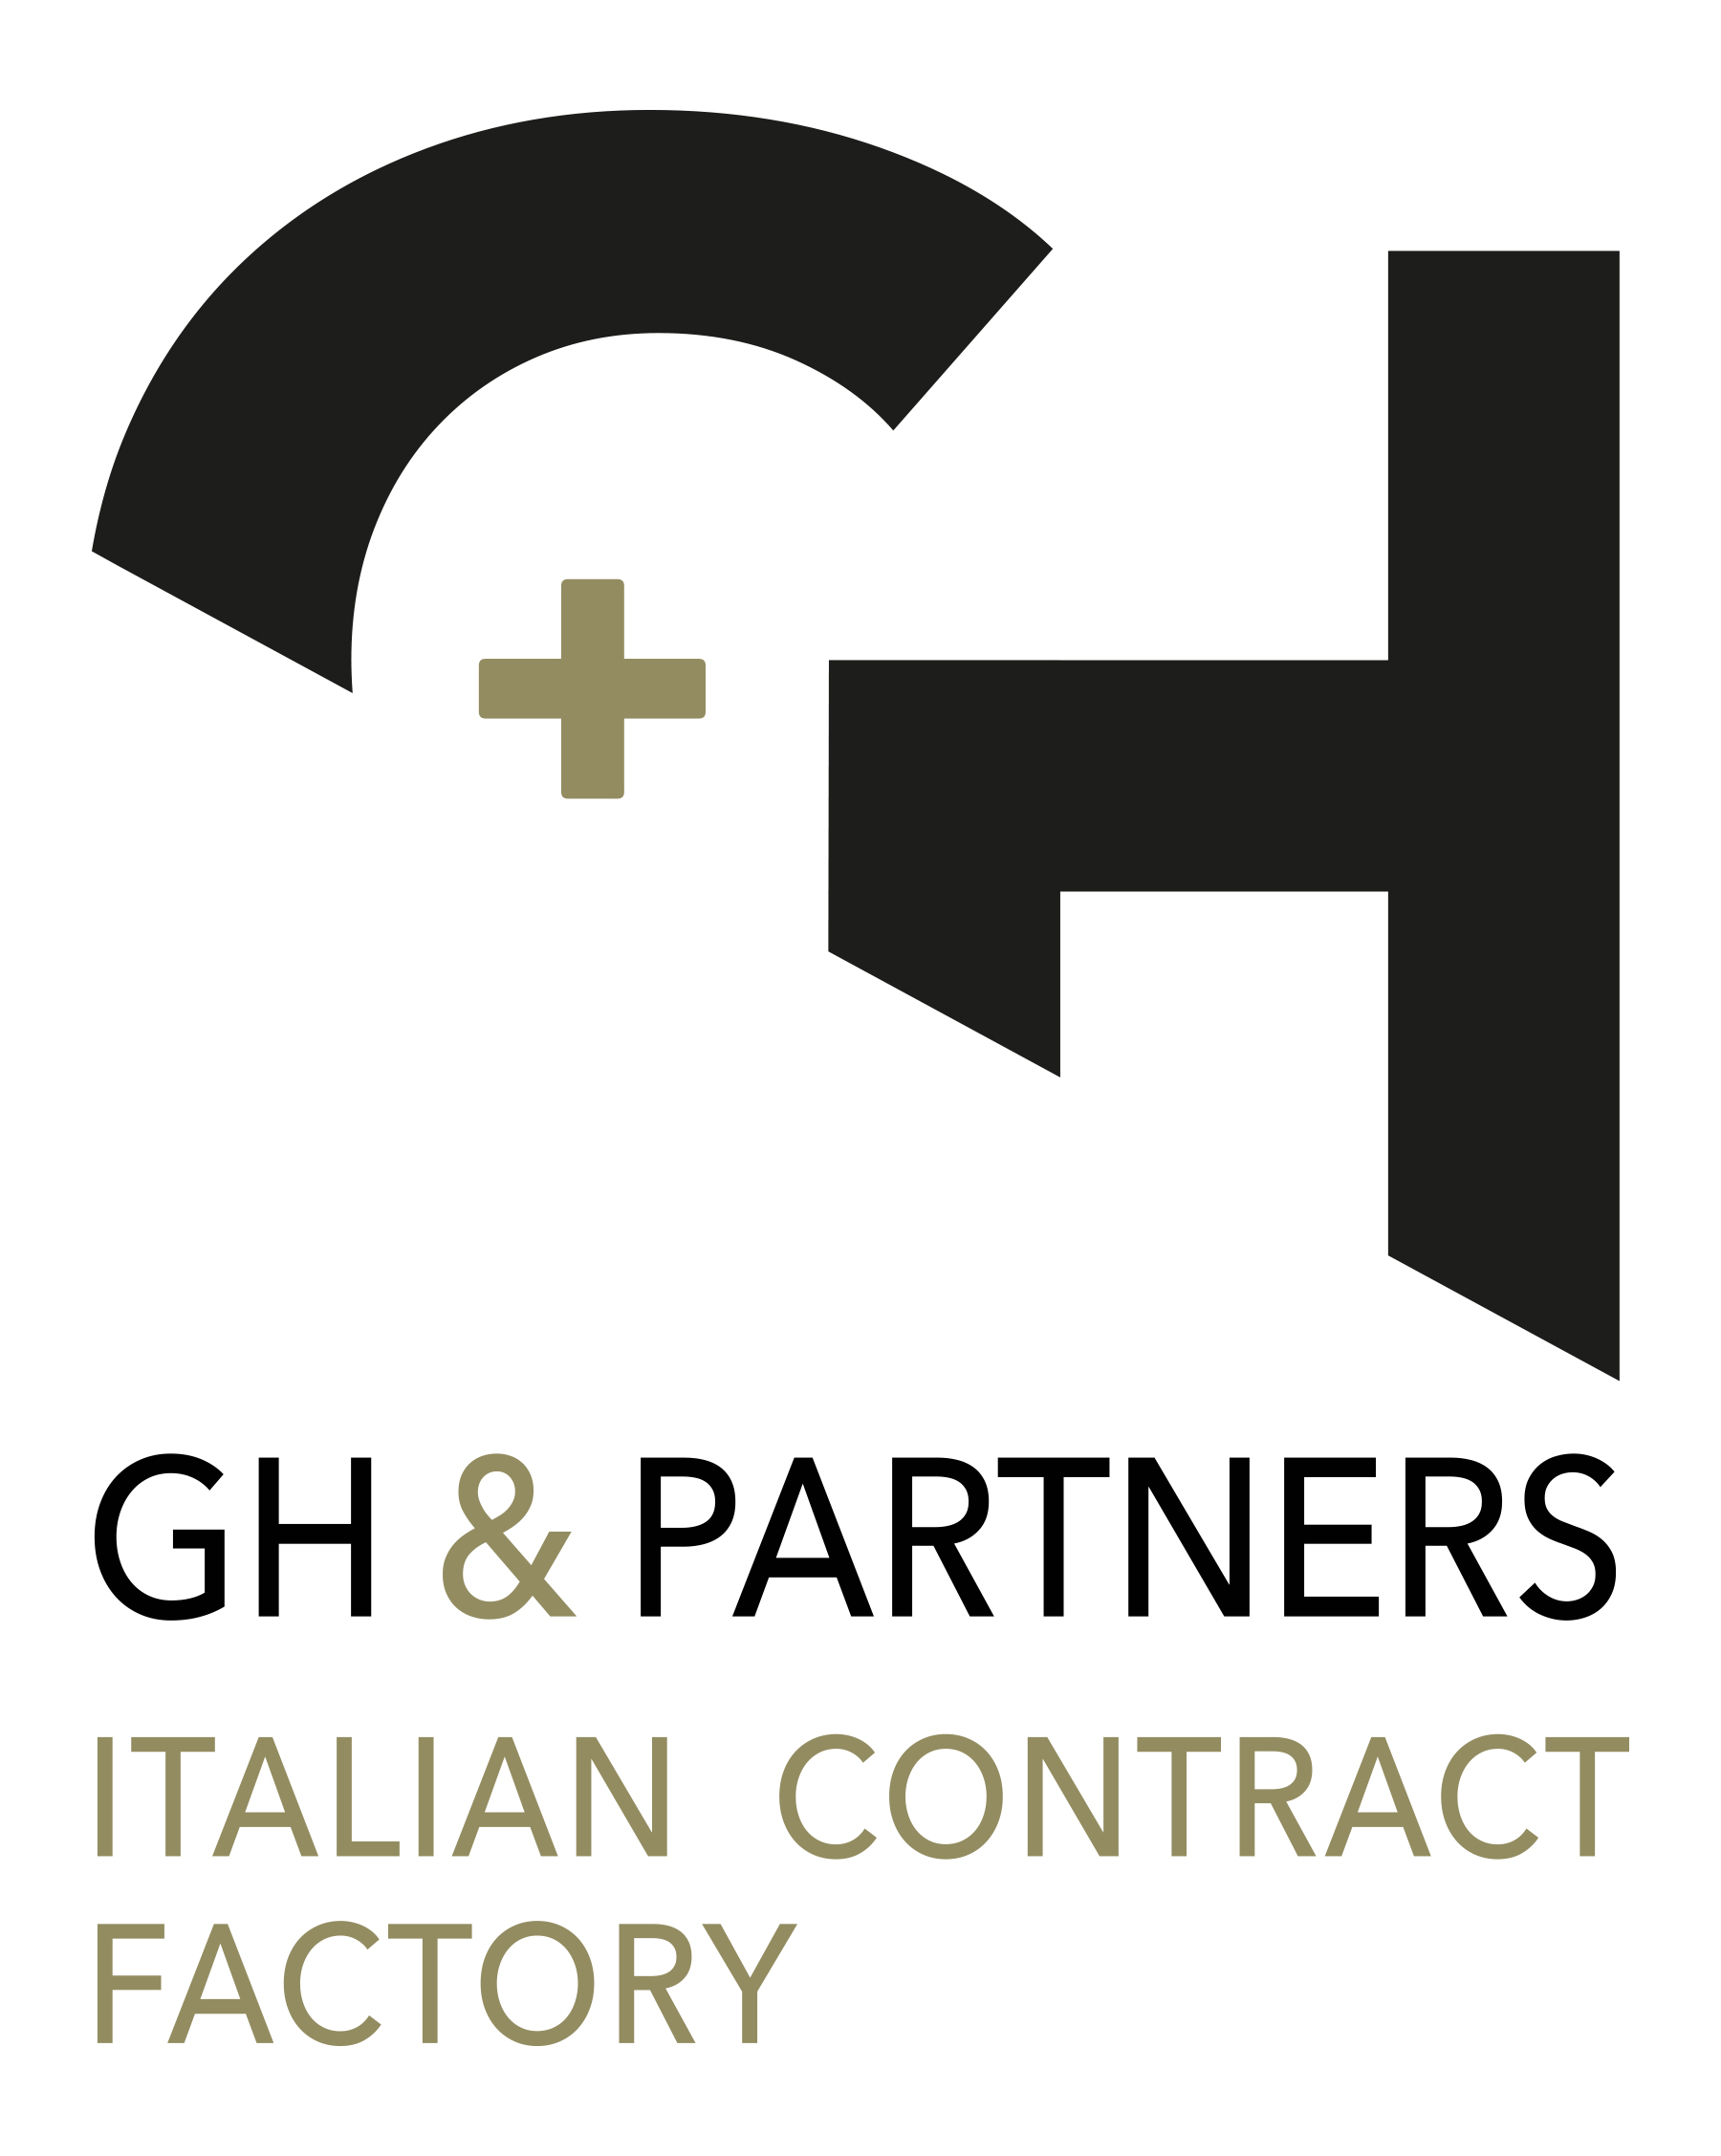 GH & Partners